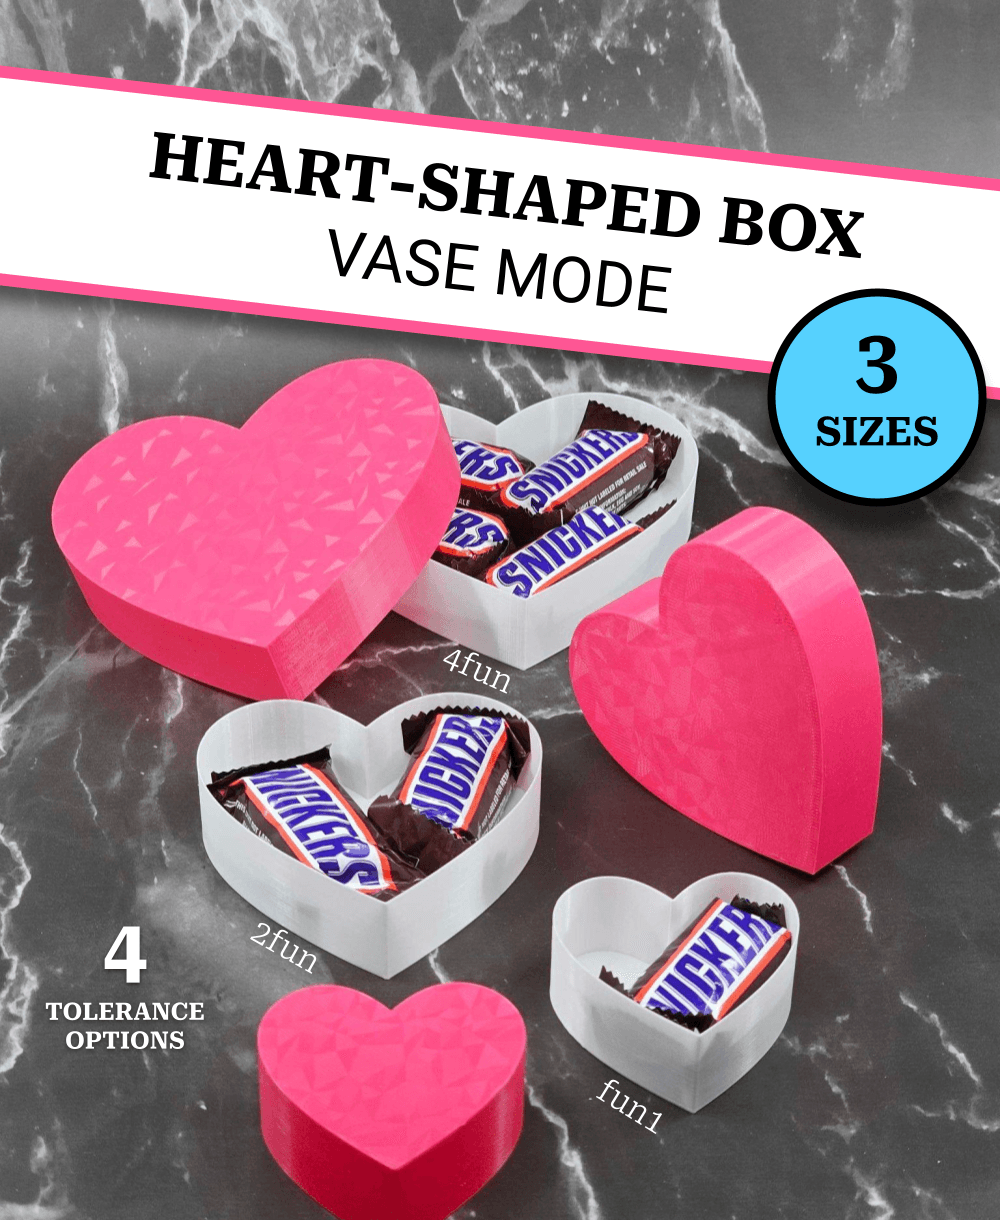 Vase Mode Heart-Shaped Boxes | 3 sizes, 4 tolerance options | Valentine's Day Gift Box 3d model